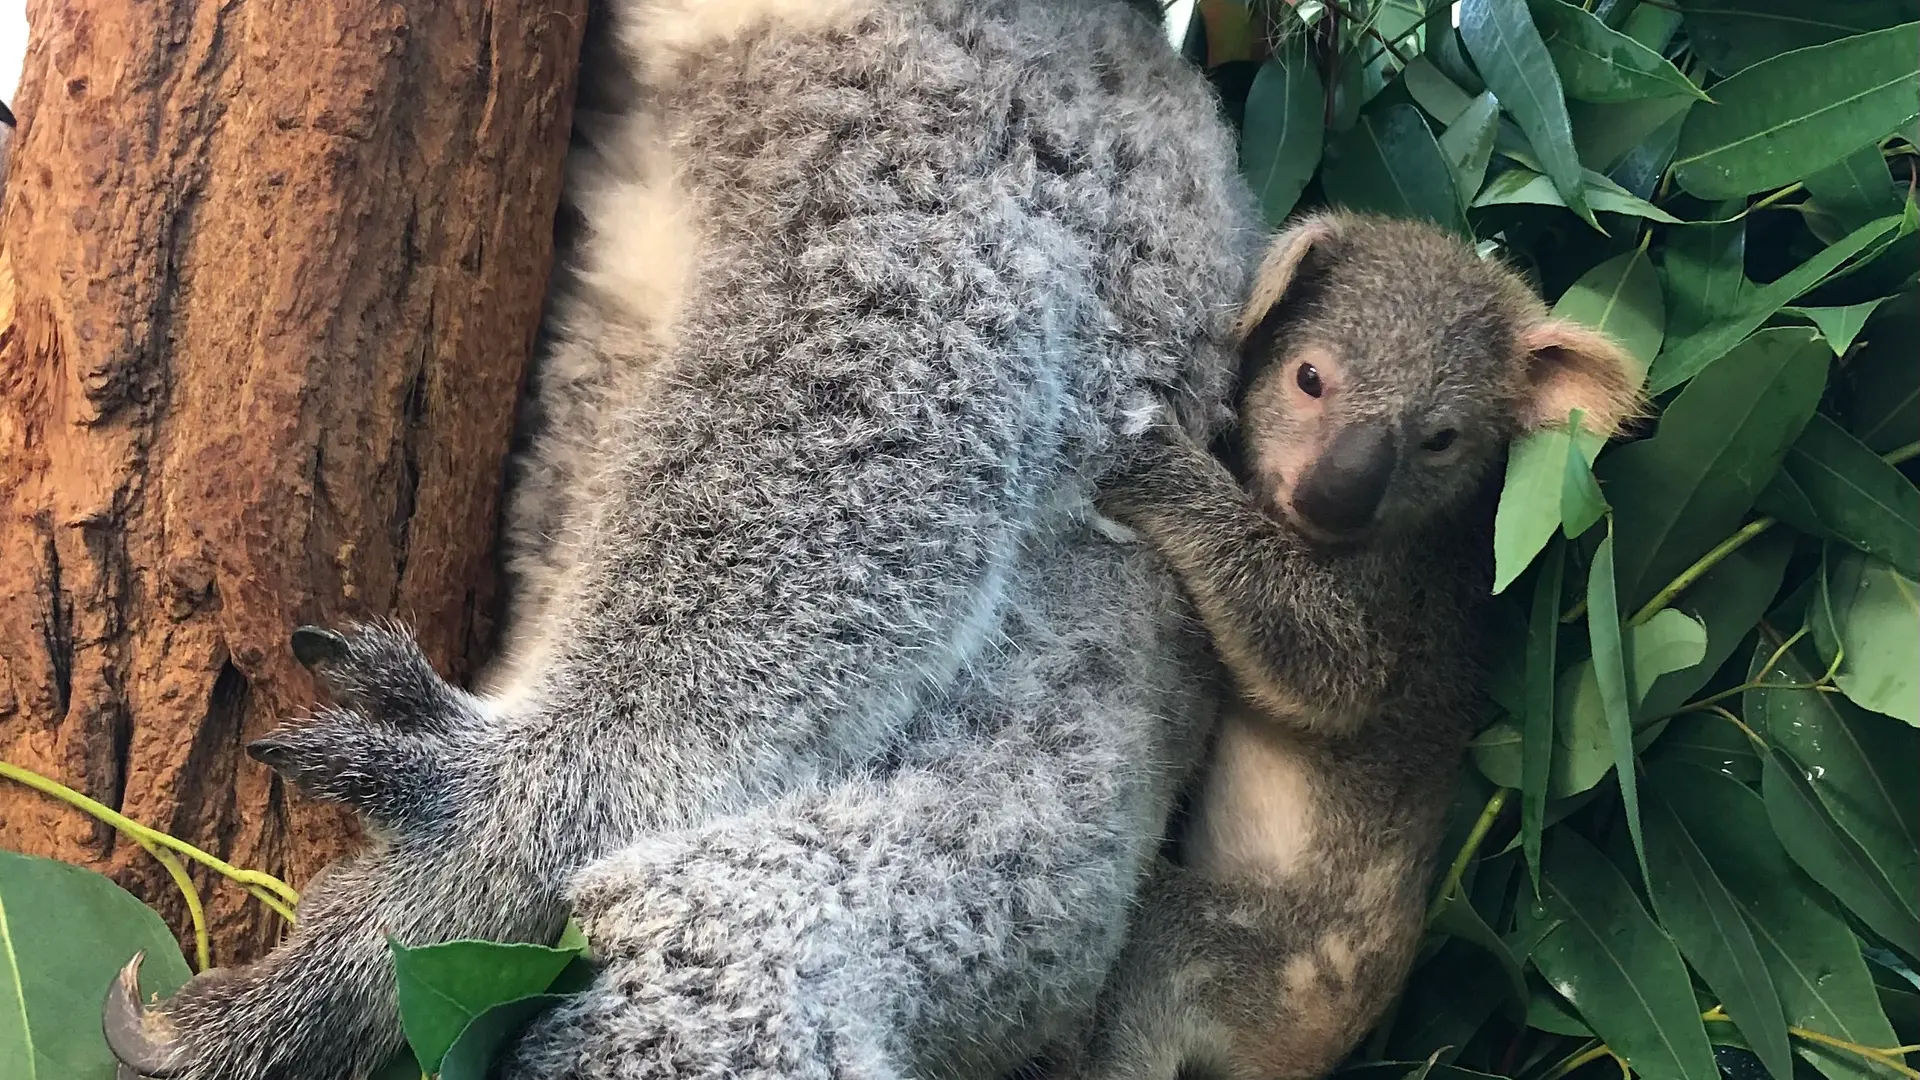 Koala baby at Schönbrunn Zoo 